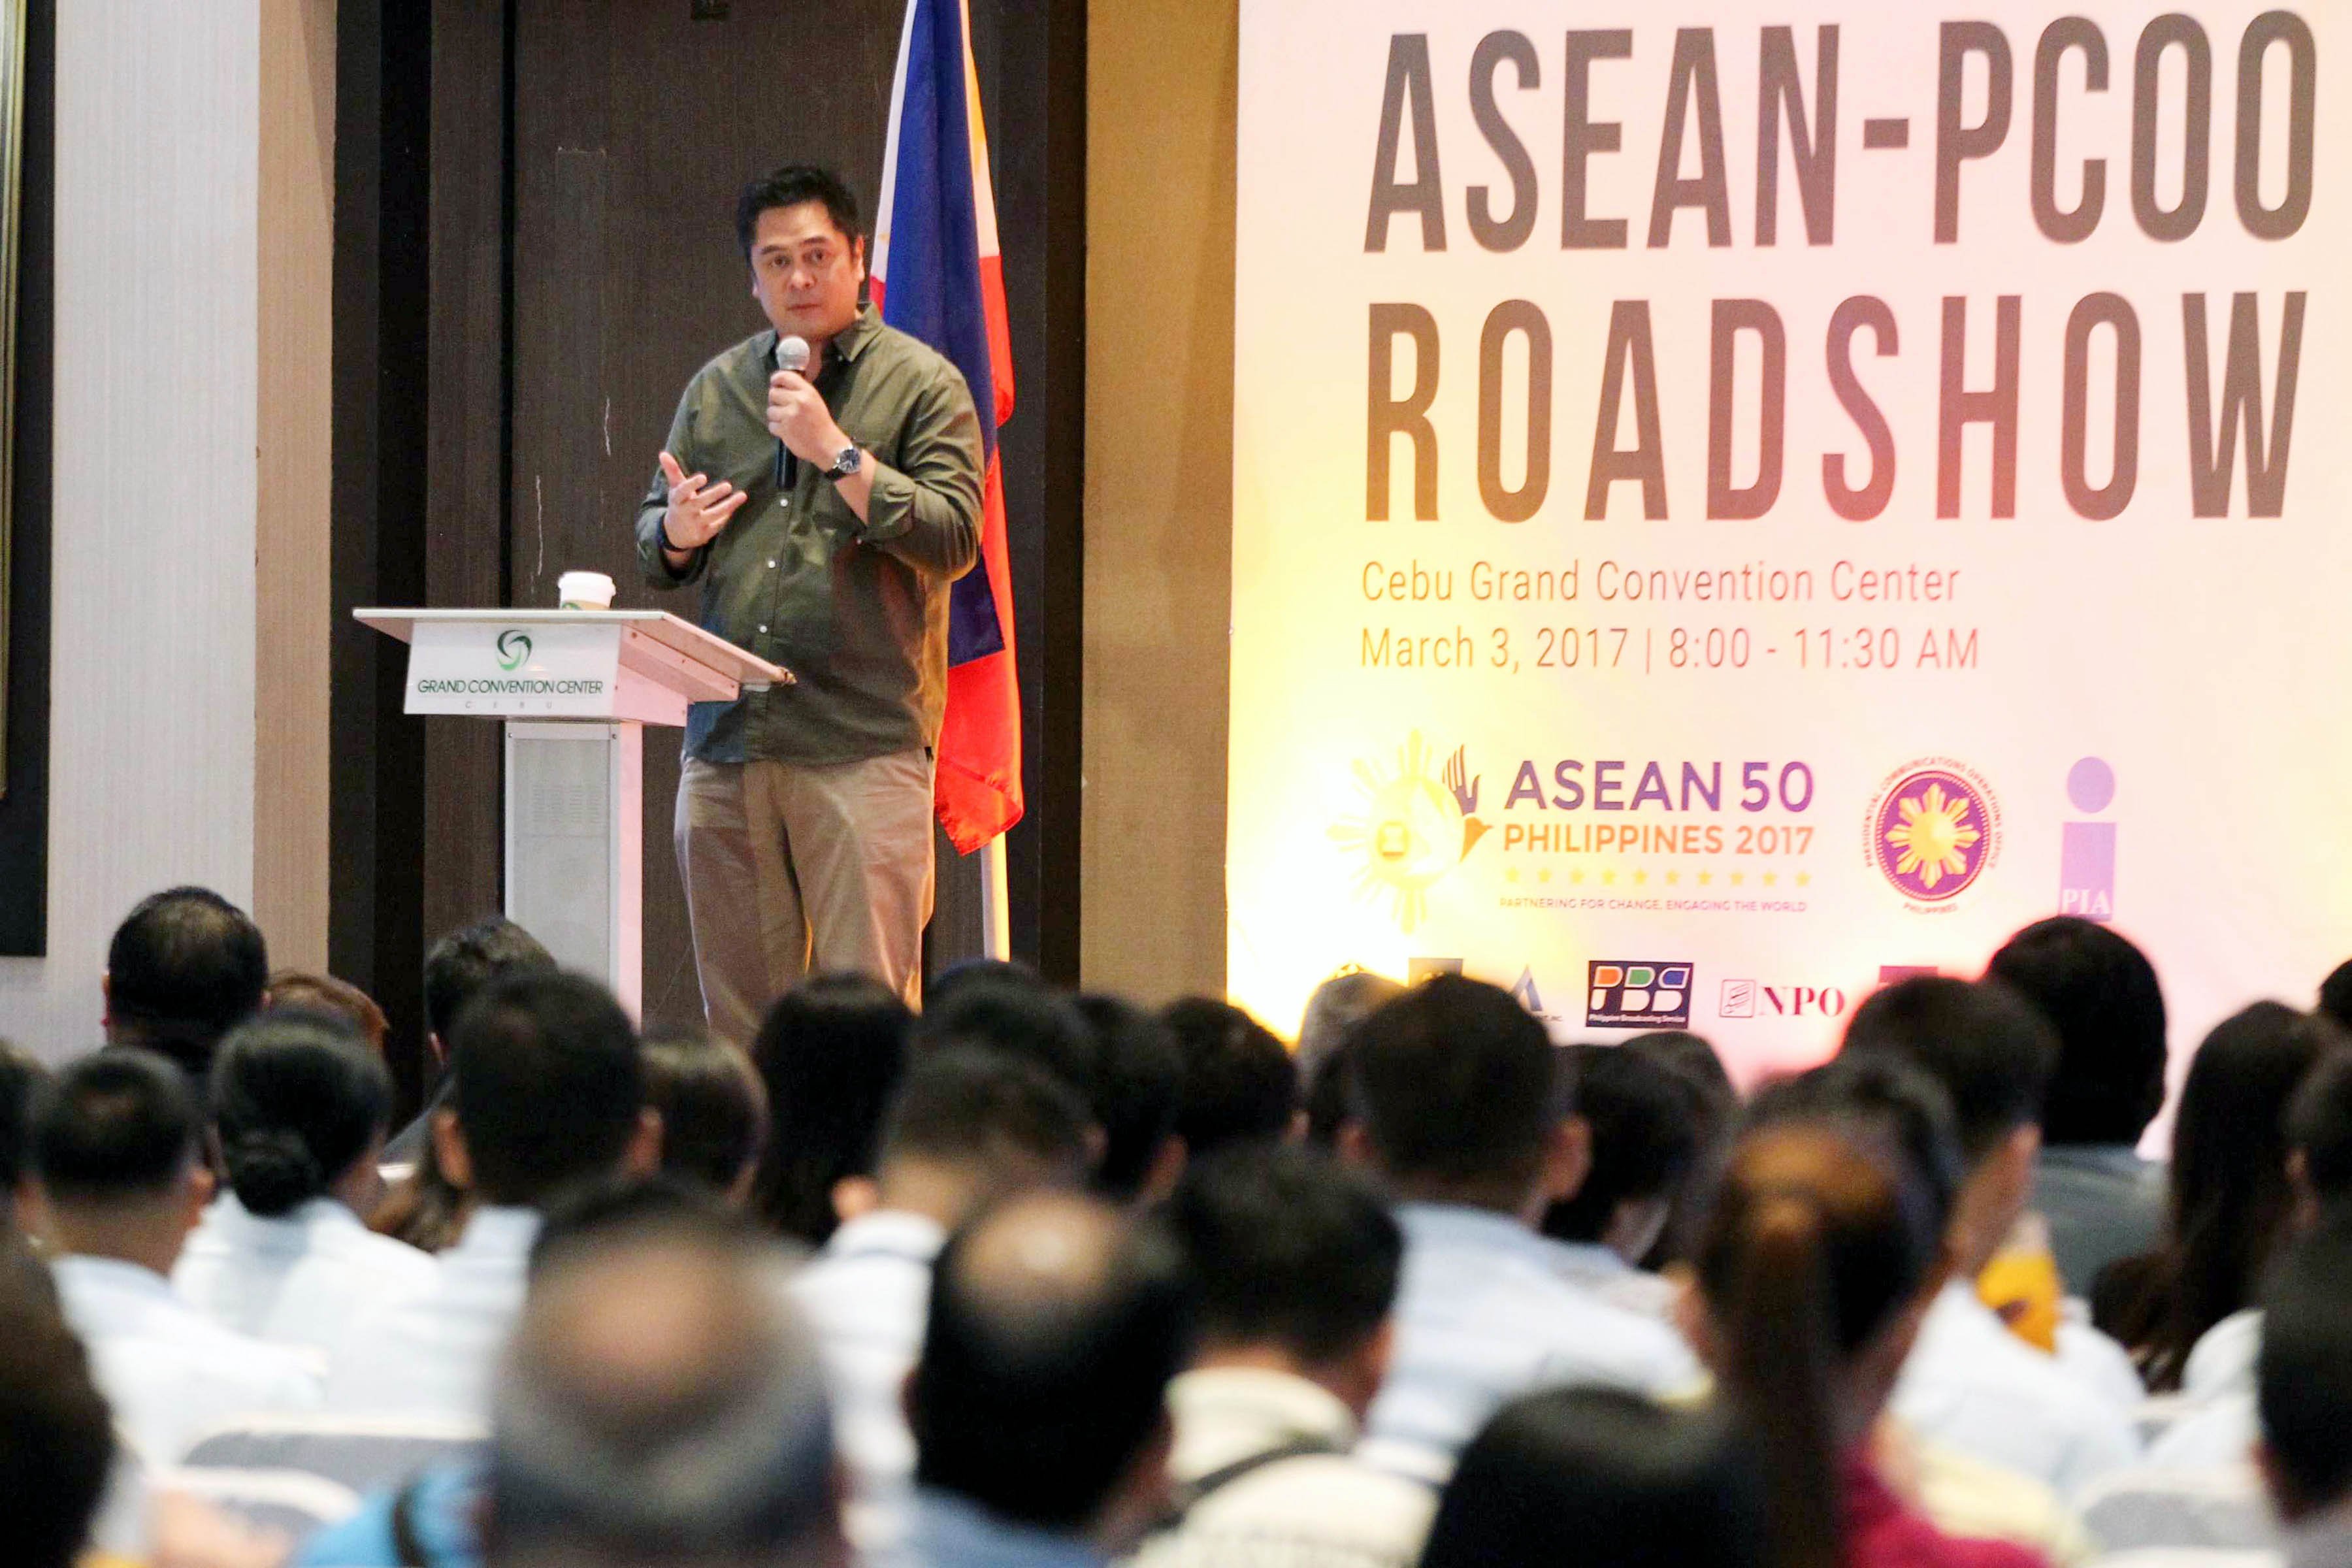 Sec. Andanar at the ASEAN-PCOO roadshow in Cebu